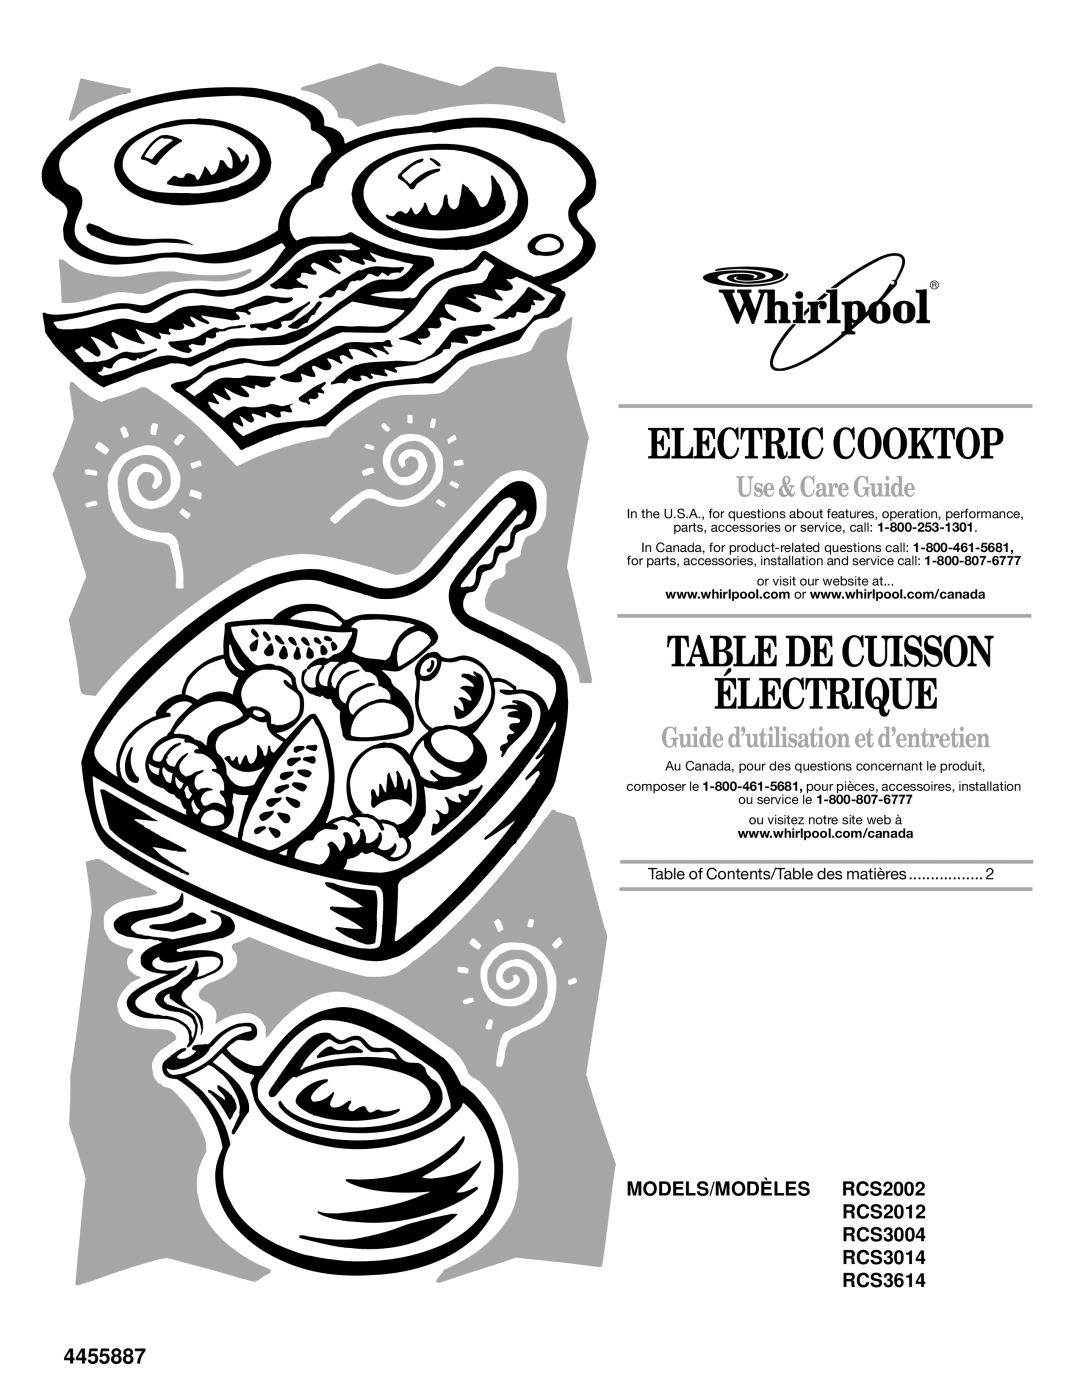 Whirlpool RCS2002 manual Use & Care Guide, Guide d’utilisation et d’entretien, 4455887, Electric Cooktop 